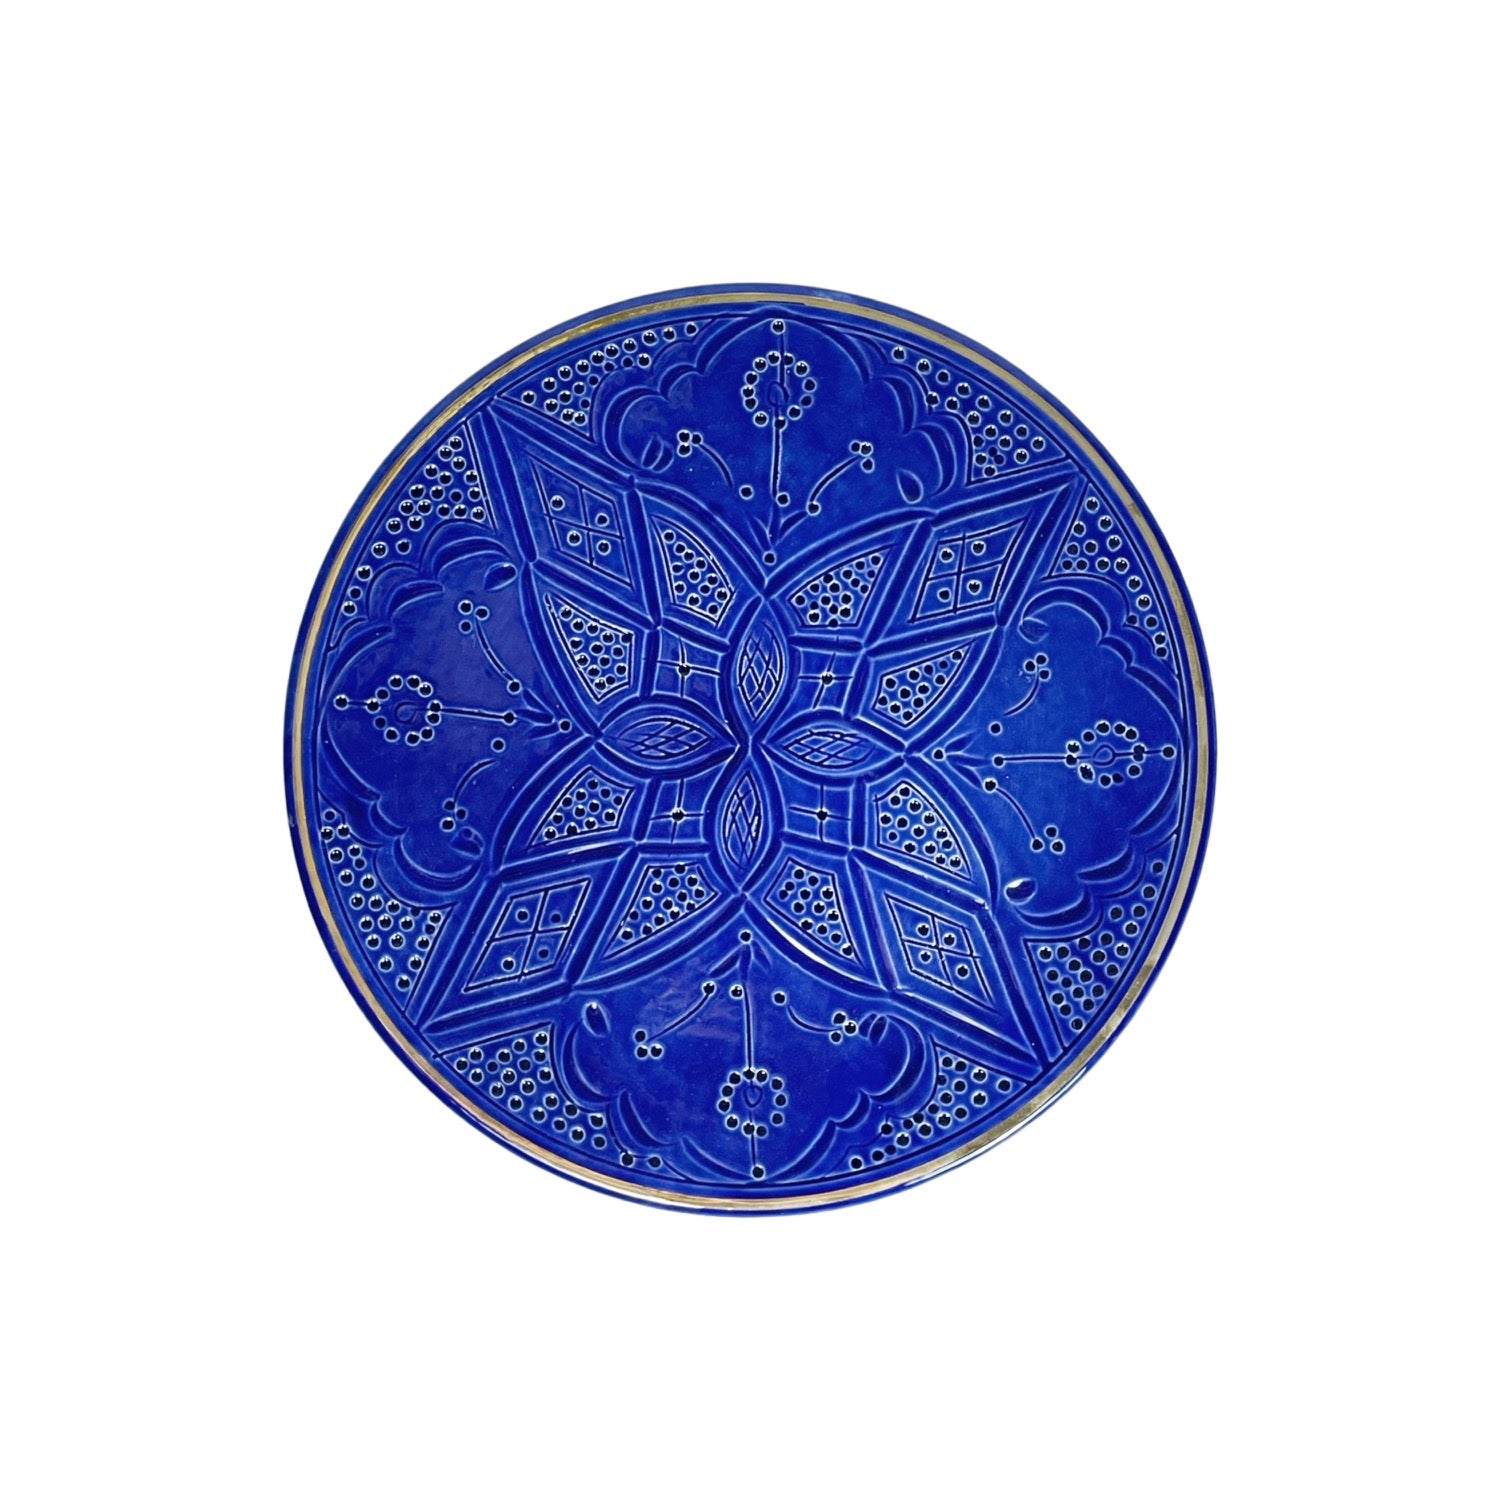 Engraved Ceramic Artistry Plate